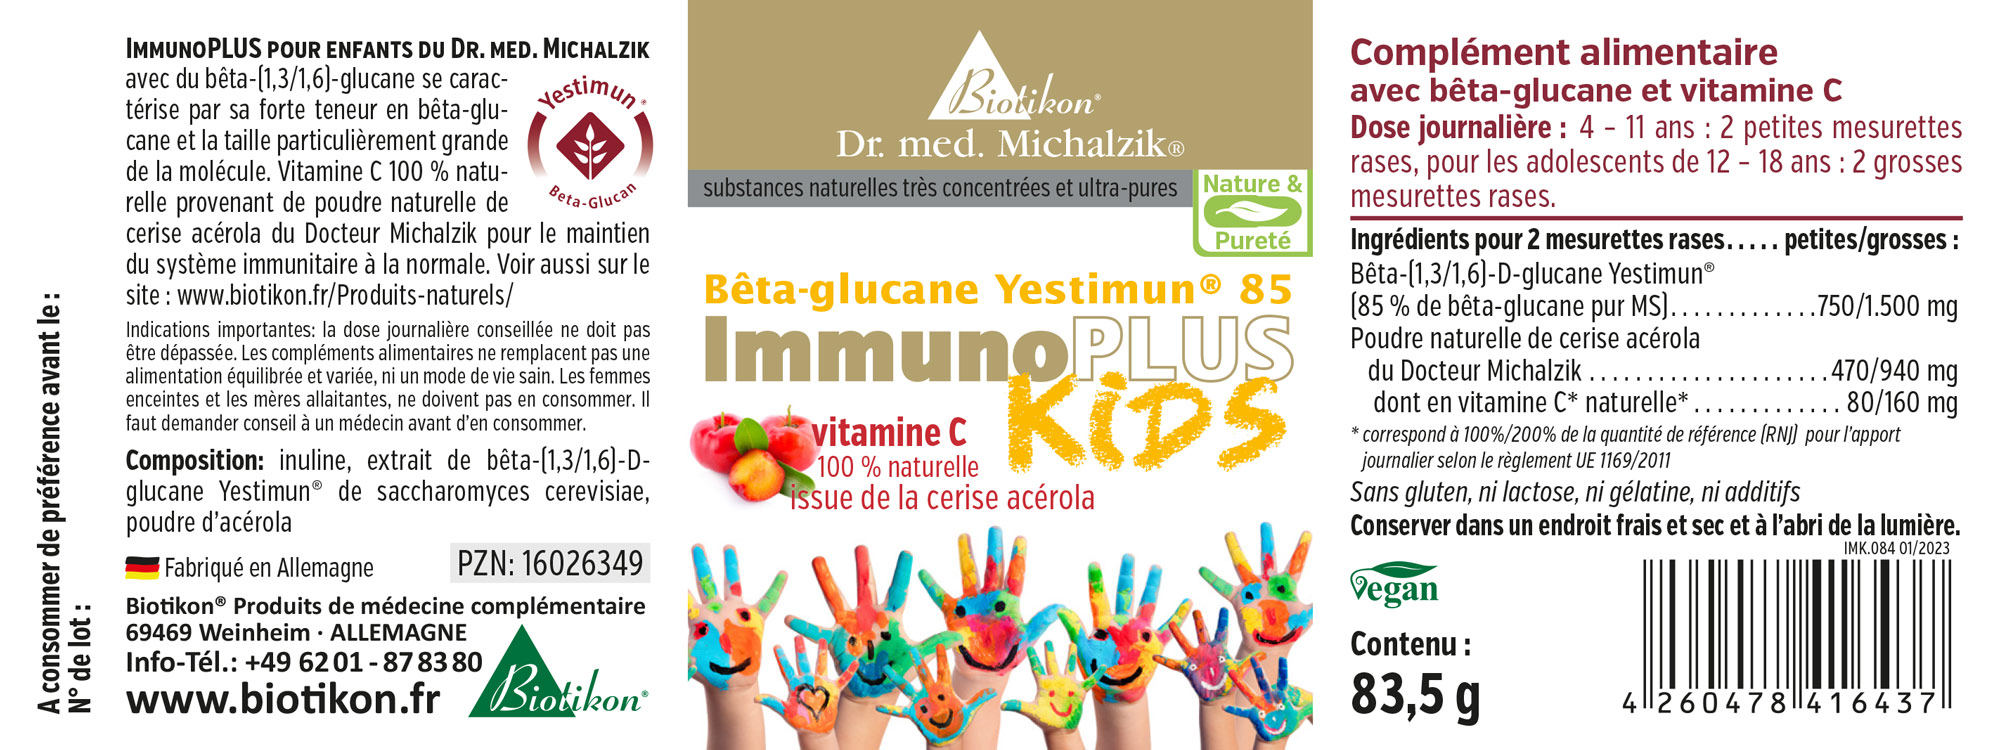 ImmunoPLUS Kids